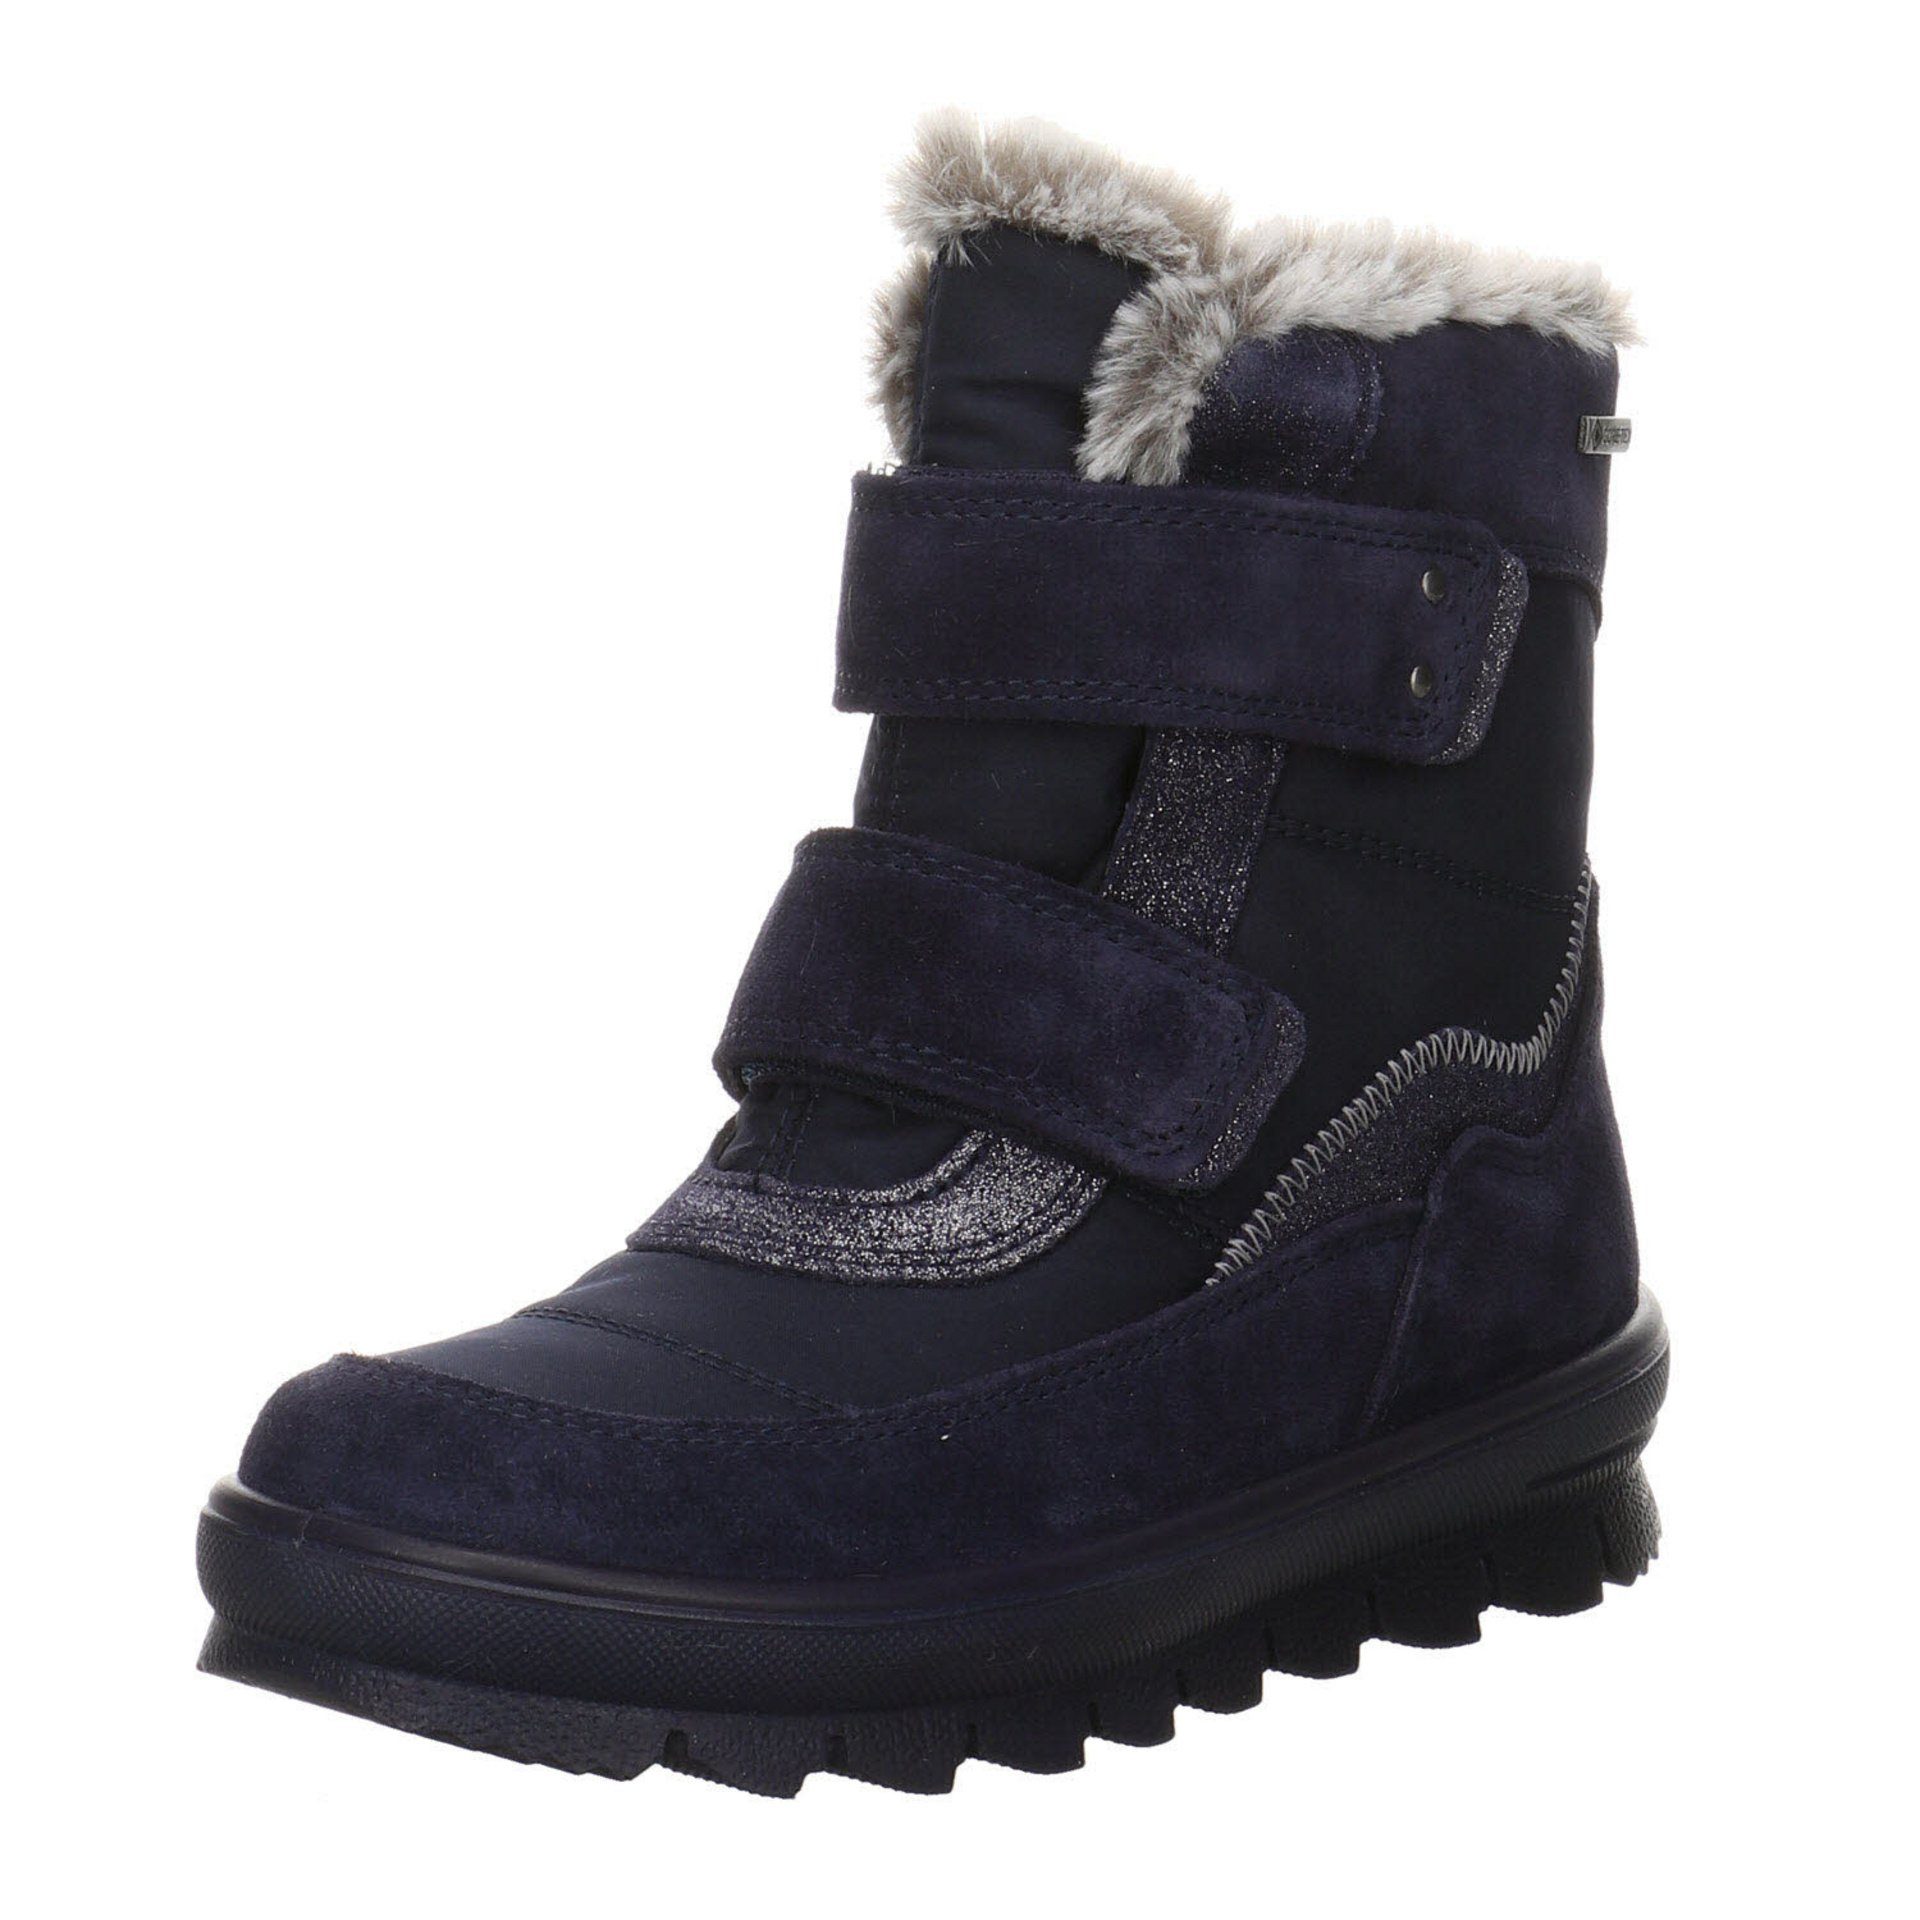 Superfit Boots Leder-/Textilkombination uni unbekannt Stiefel Leder-/Textilkombination